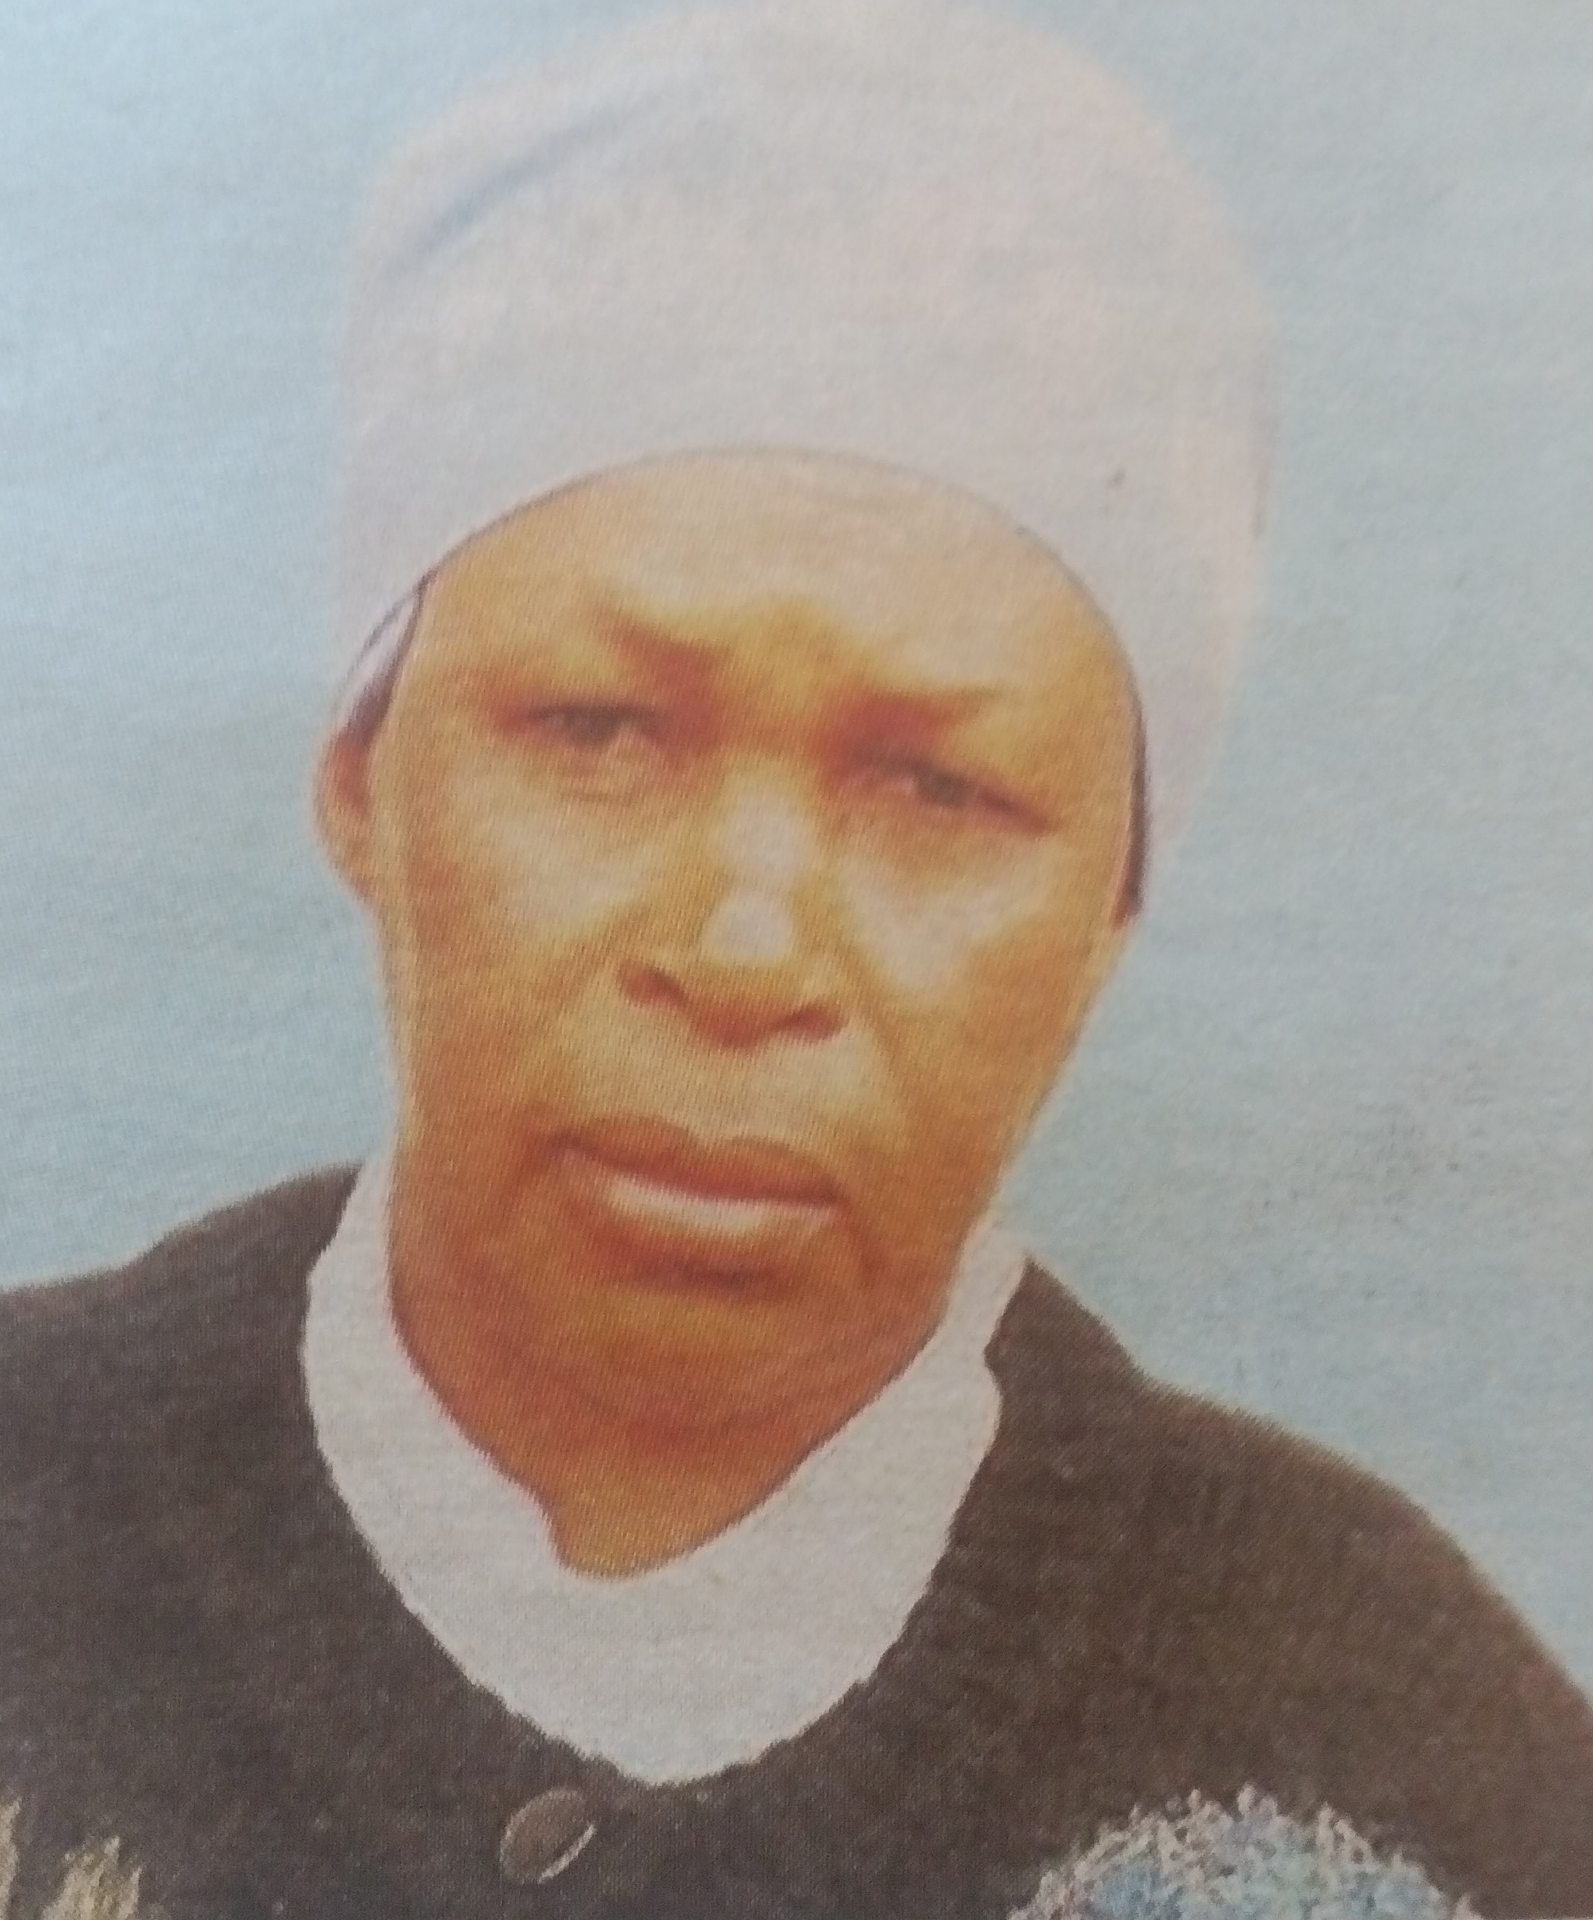 Obituary Image of Ruth Wambui Gathumbi